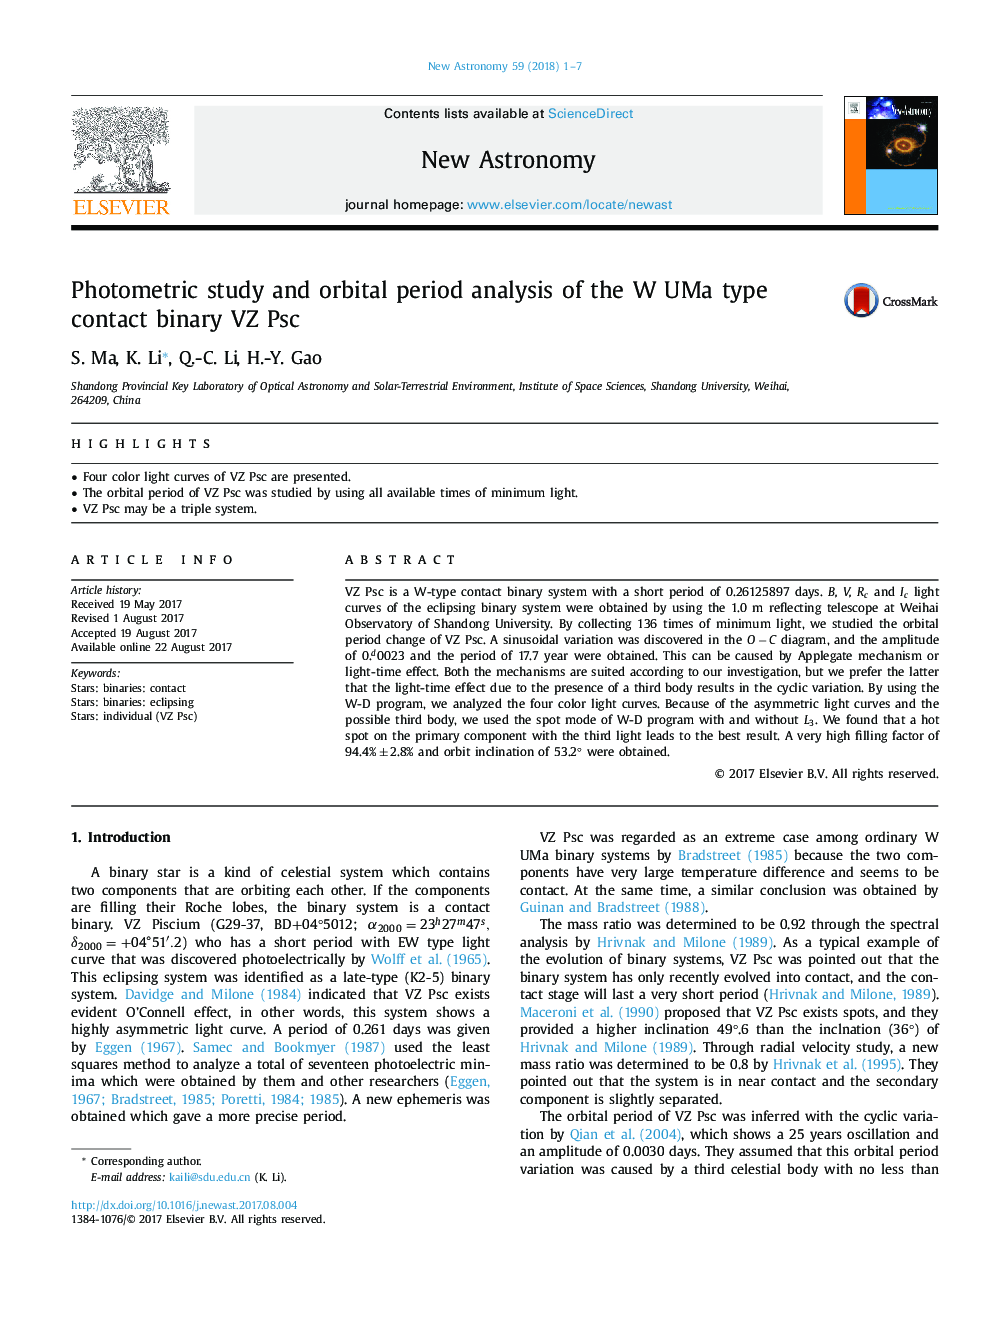 Photometric study and orbital period analysis of the W UMa type contact binary VZ Psc